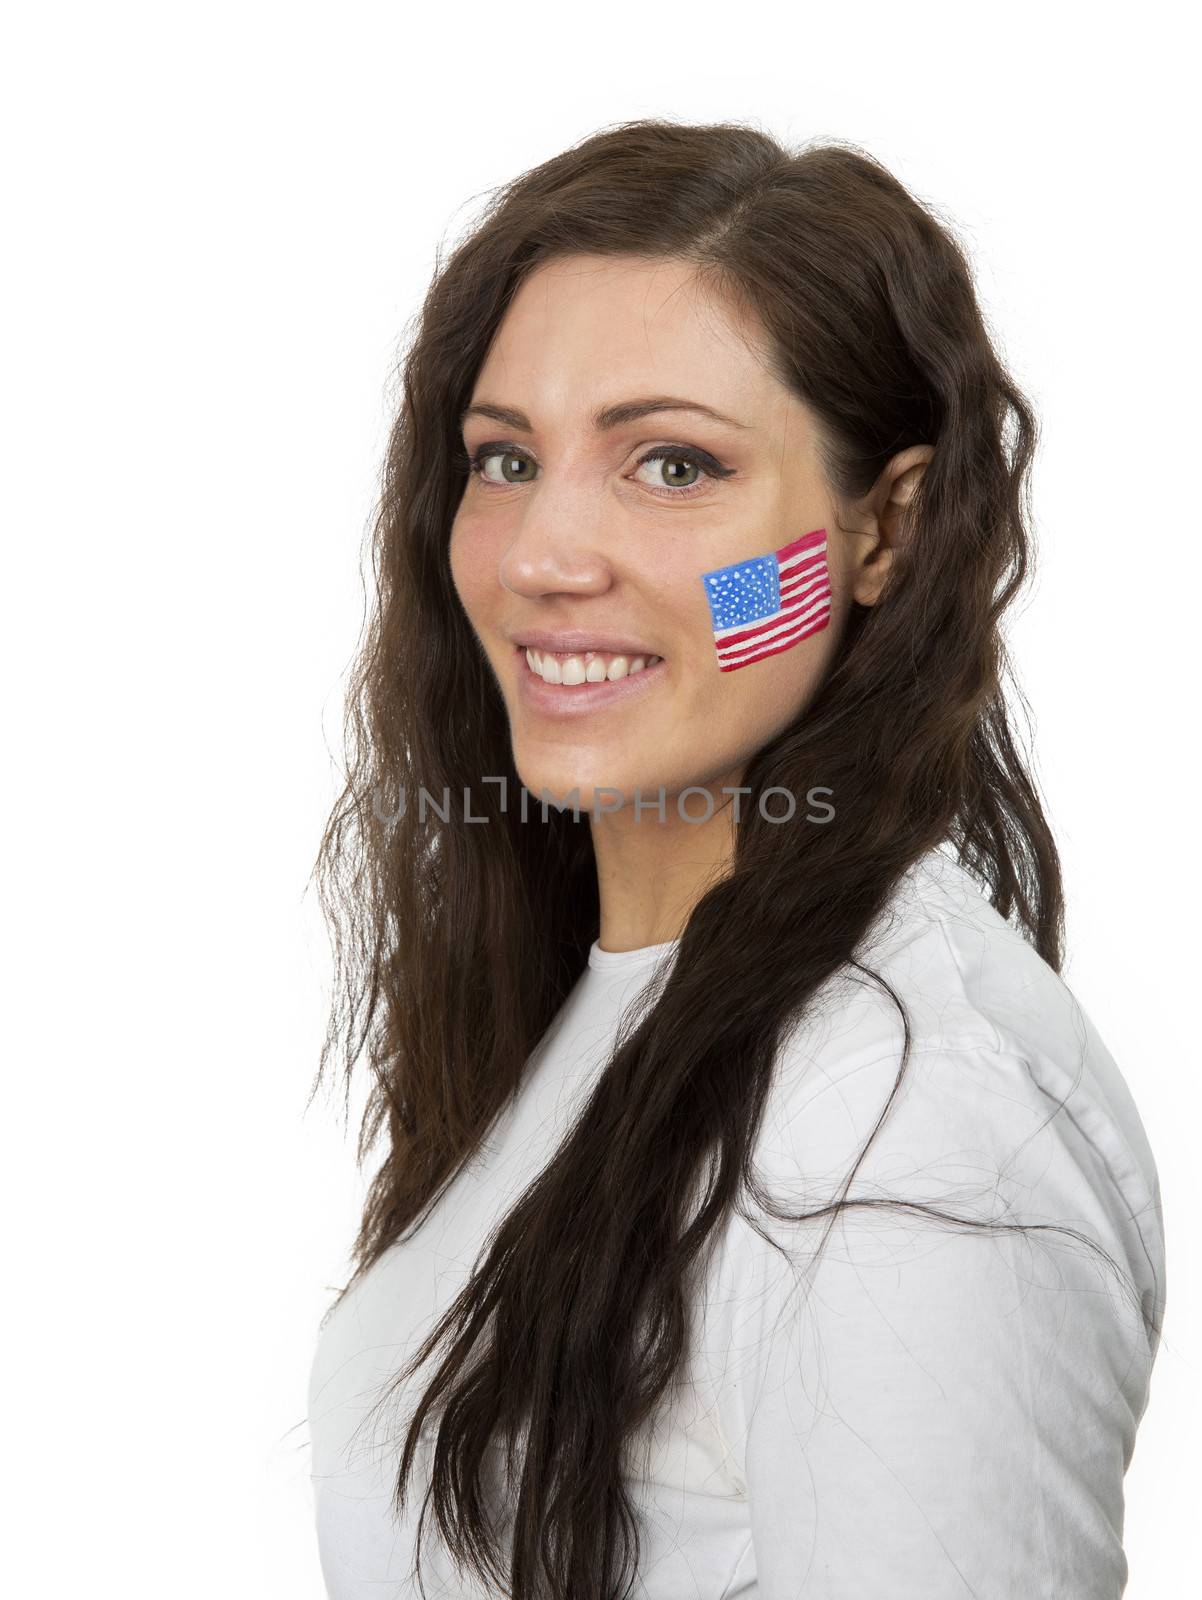 American Girl by gemenacom